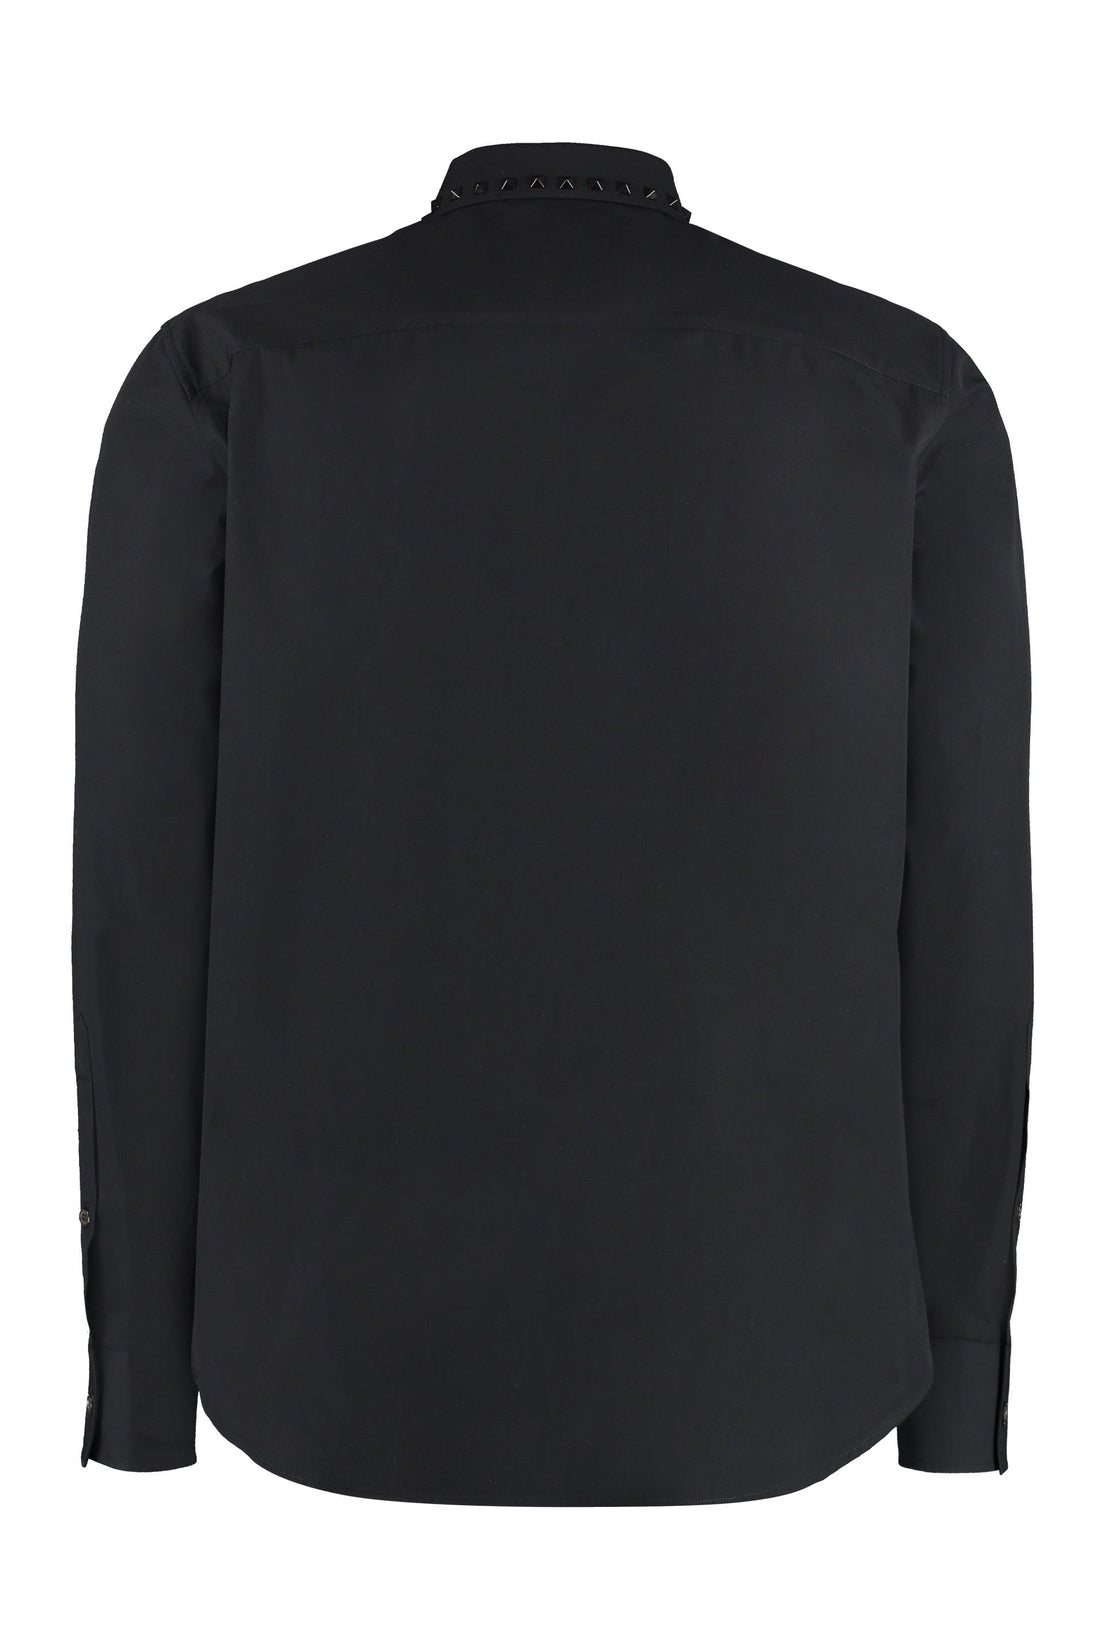 Valentino-OUTLET-SALE-Long sleeve cotton shirt-ARCHIVIST